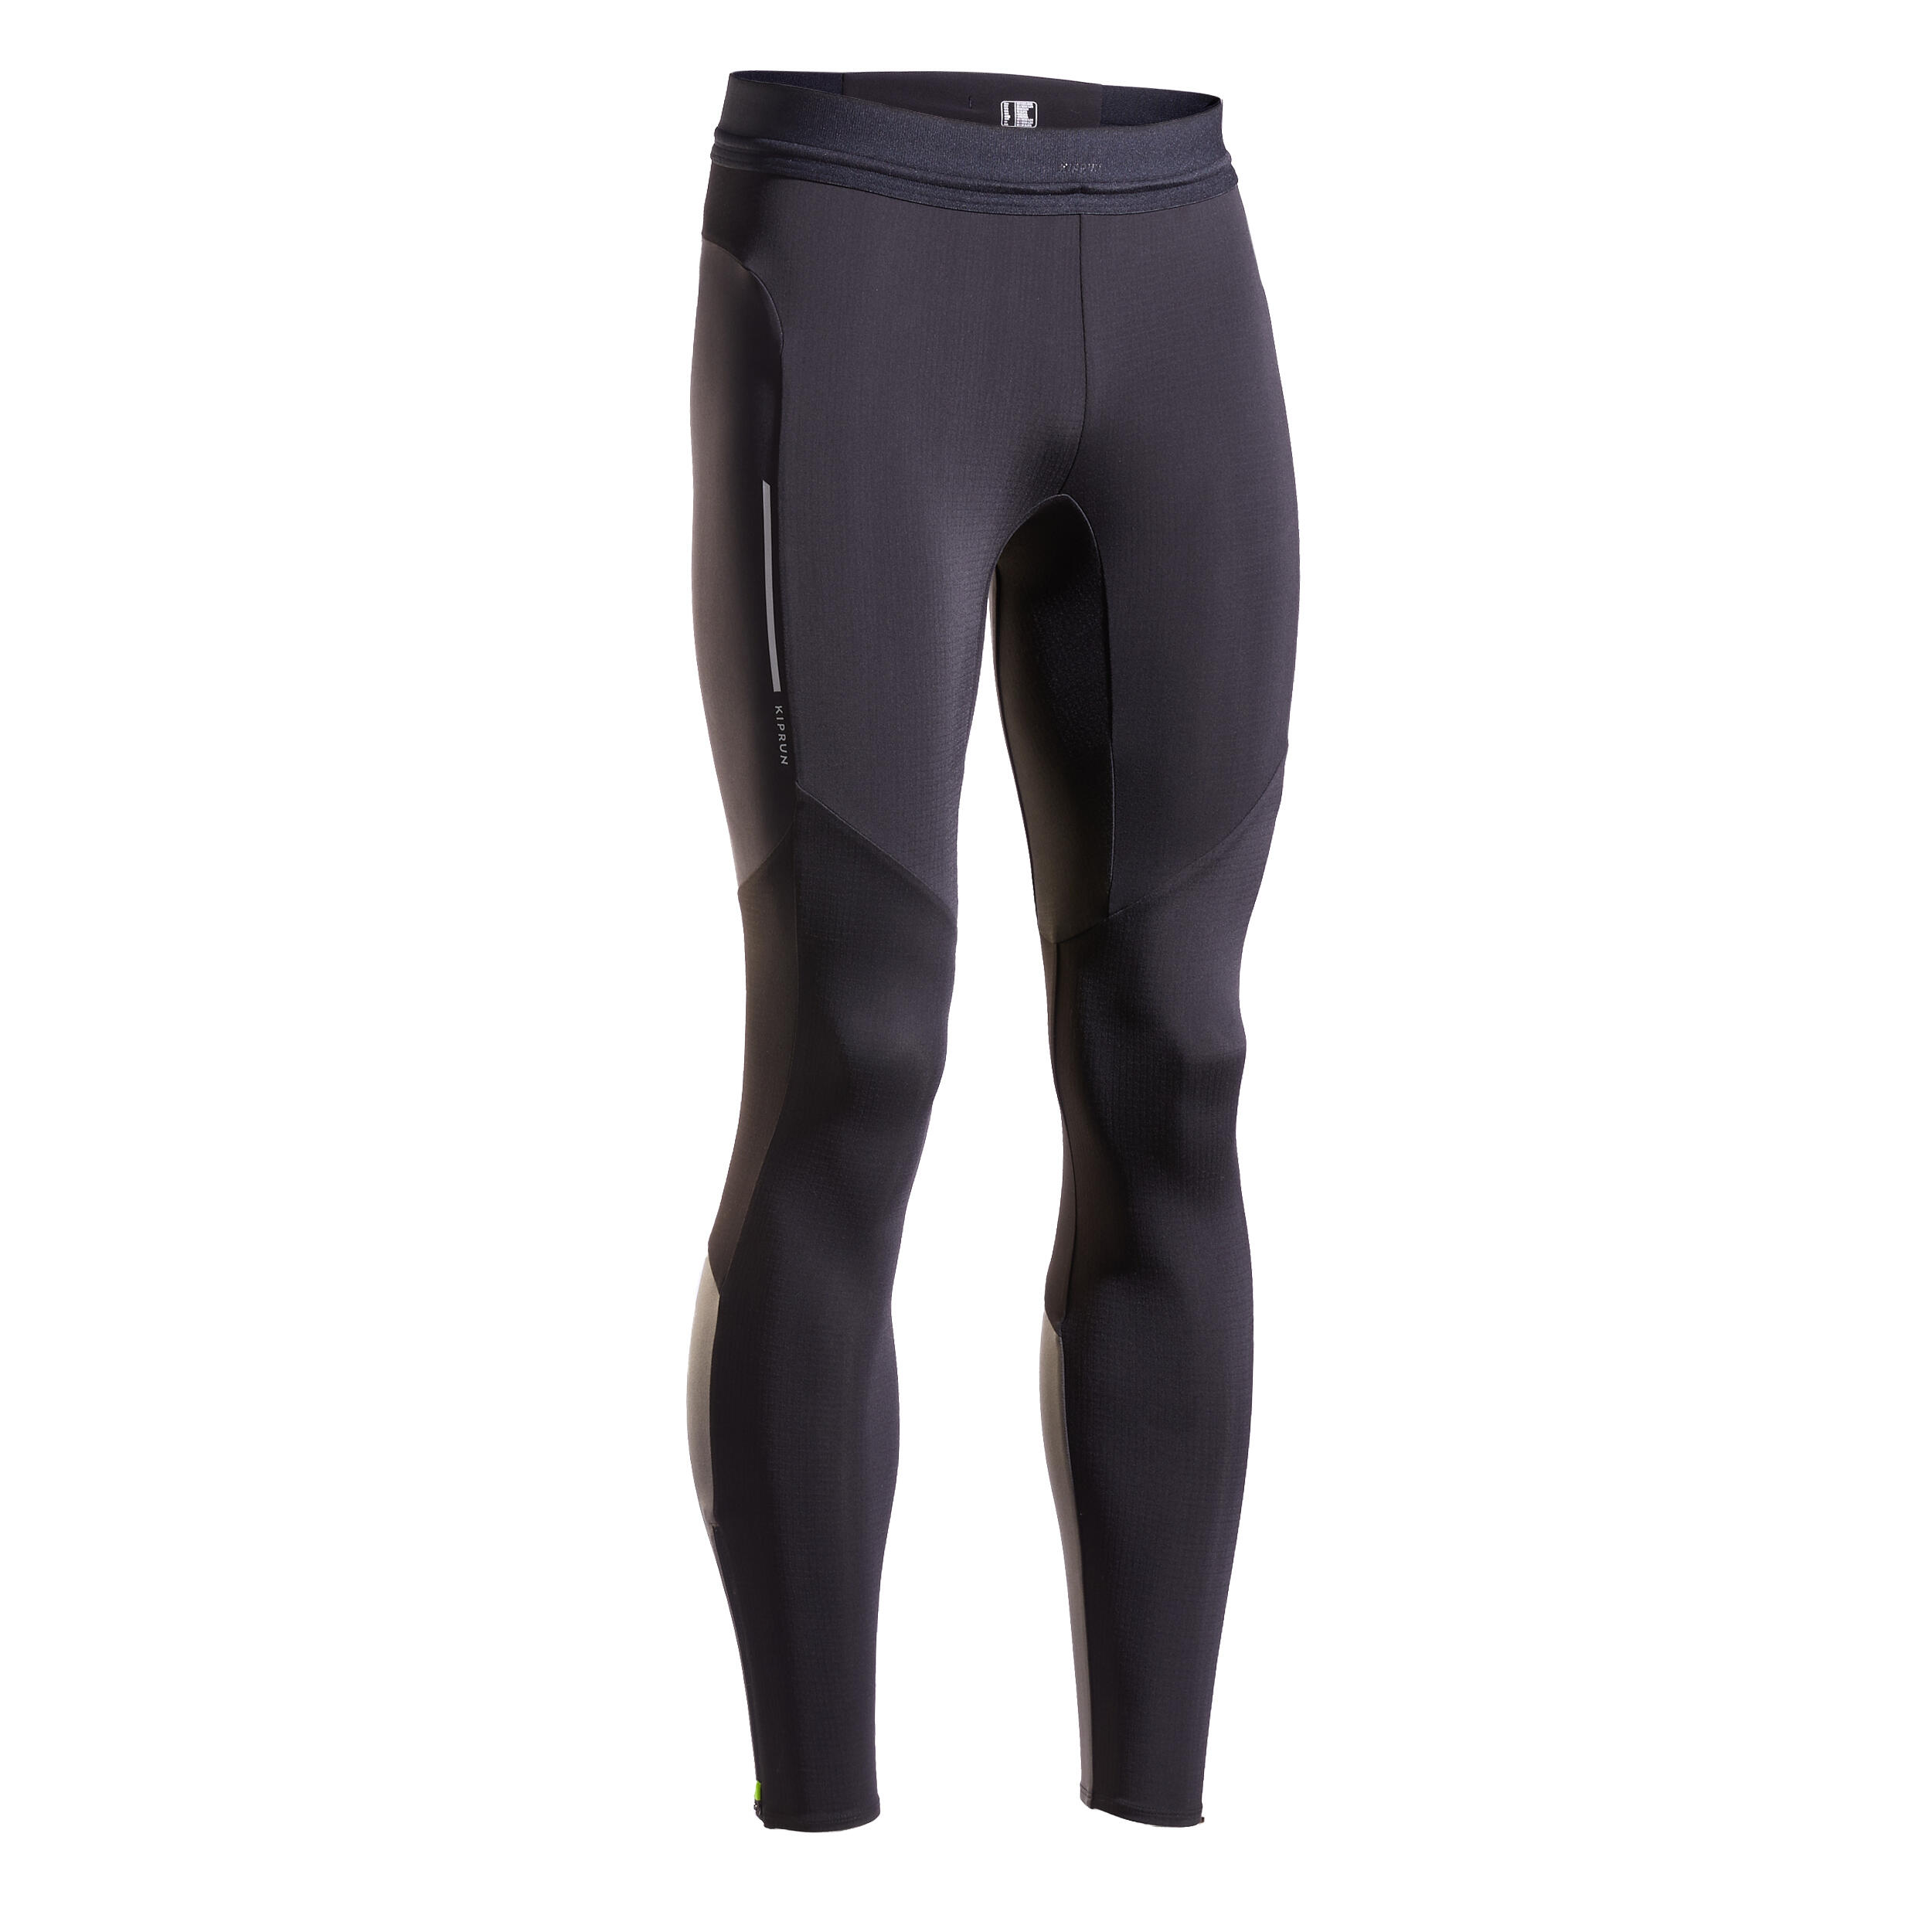 Men's Running Leggings - Warm Black/Grey - Black, Carbon grey, Fluo ...